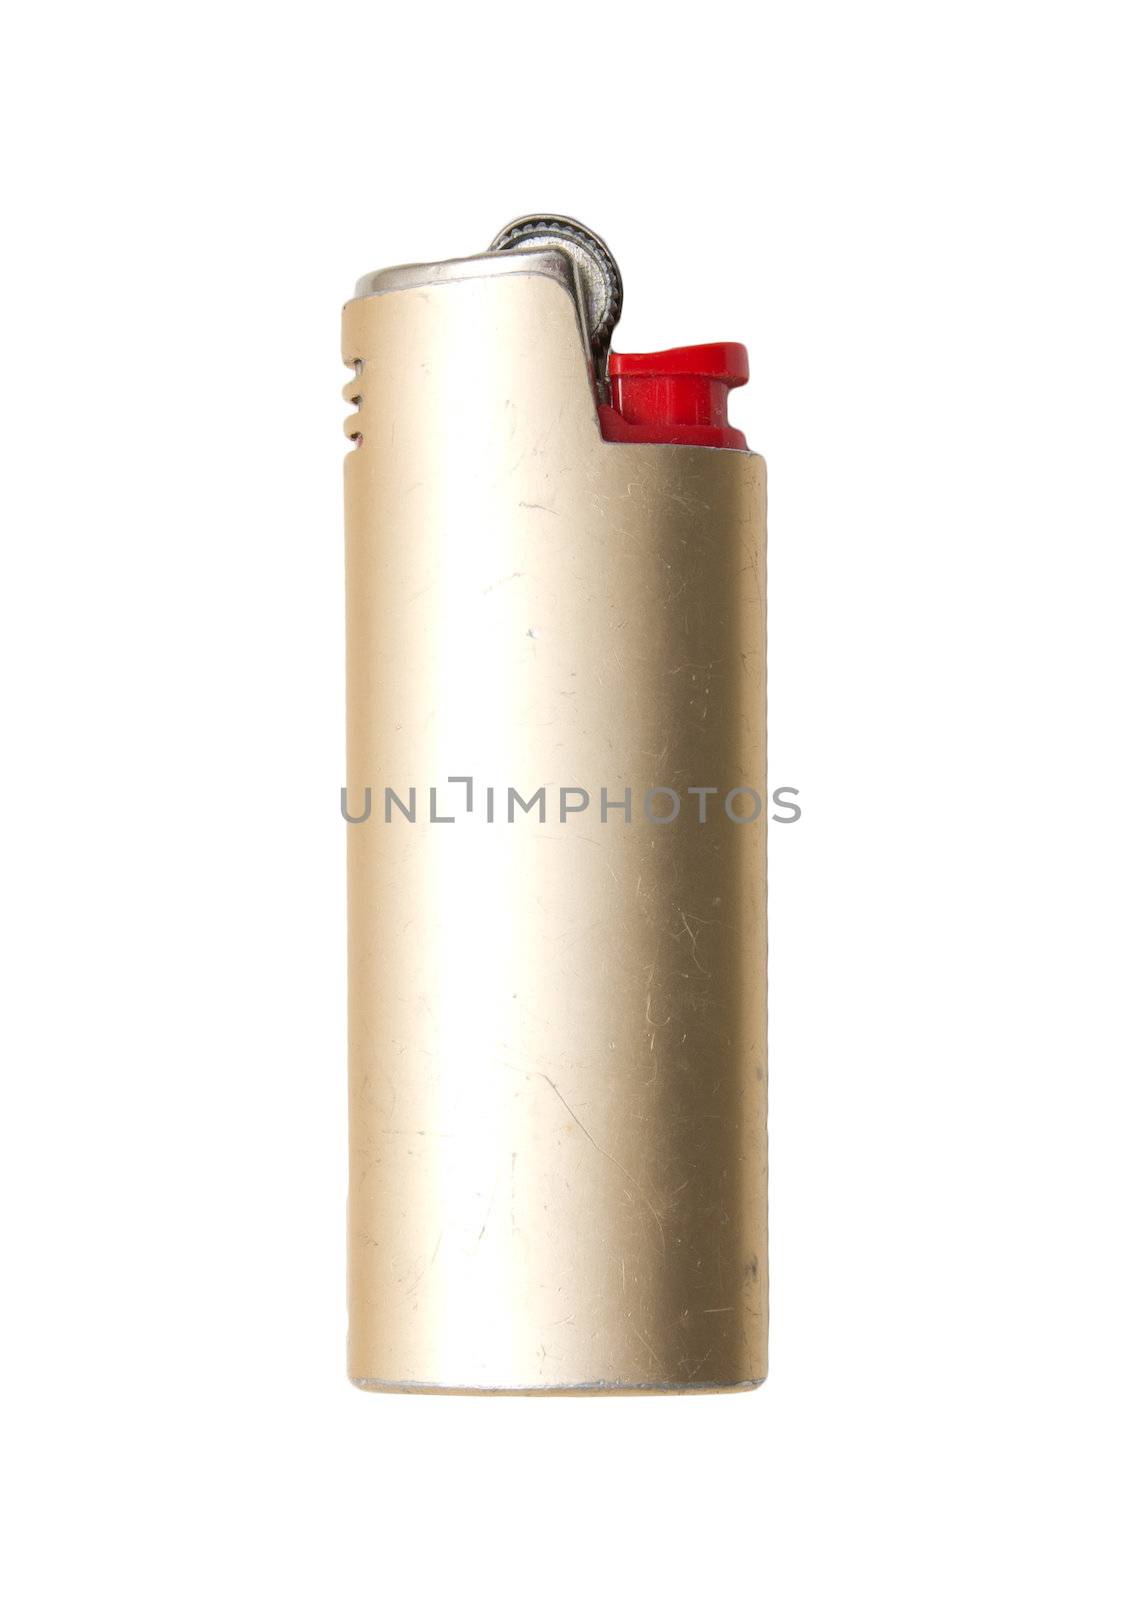 Lighter on a white background